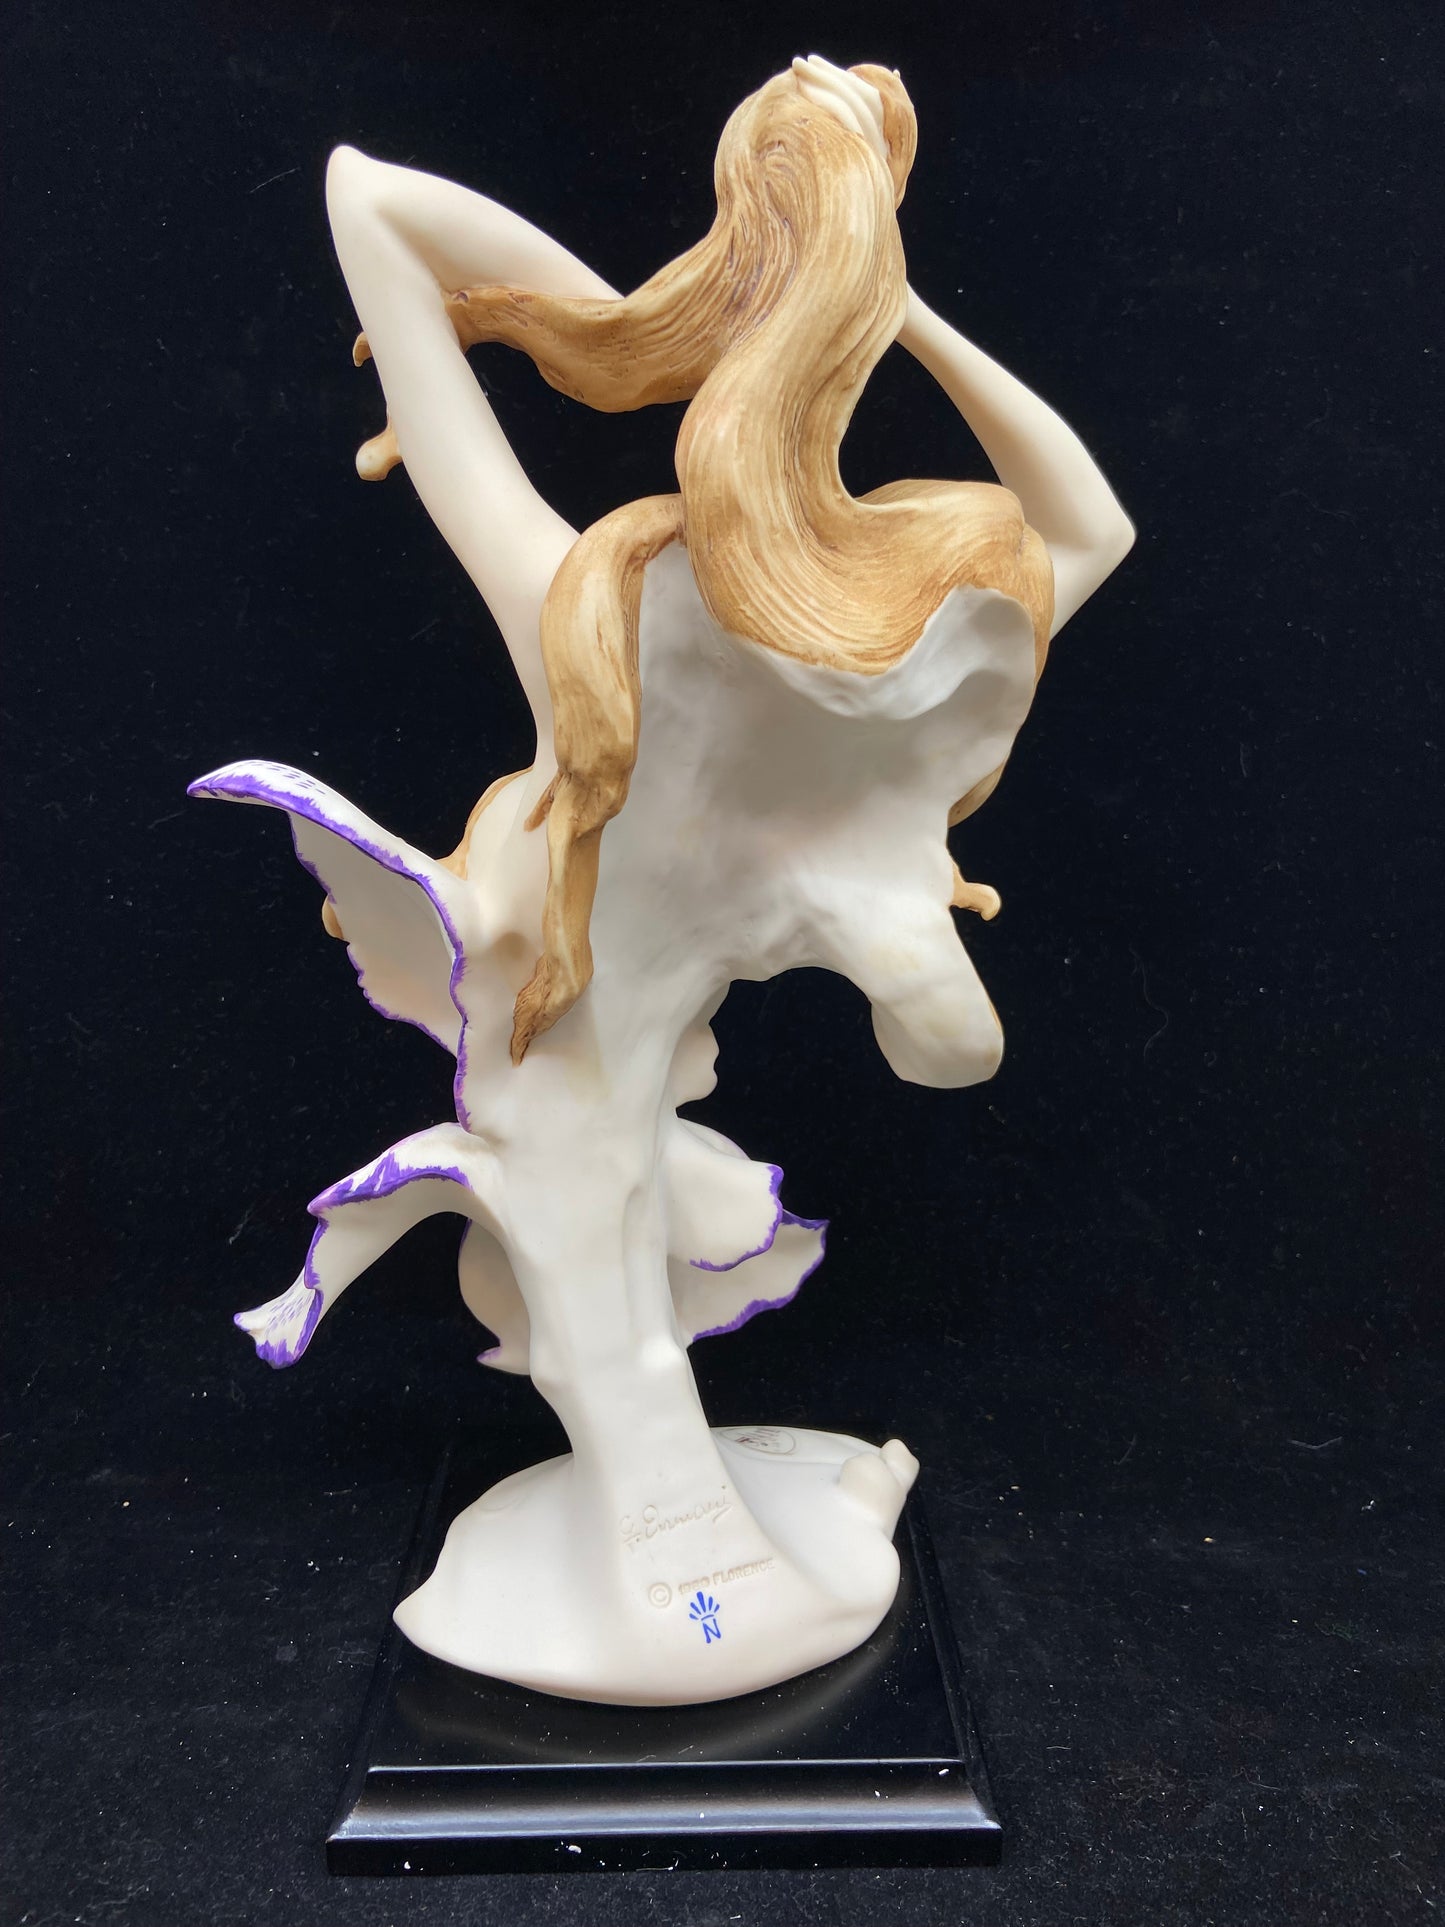 G. Armani "The Awakening" Porcelain Figurine (26415)